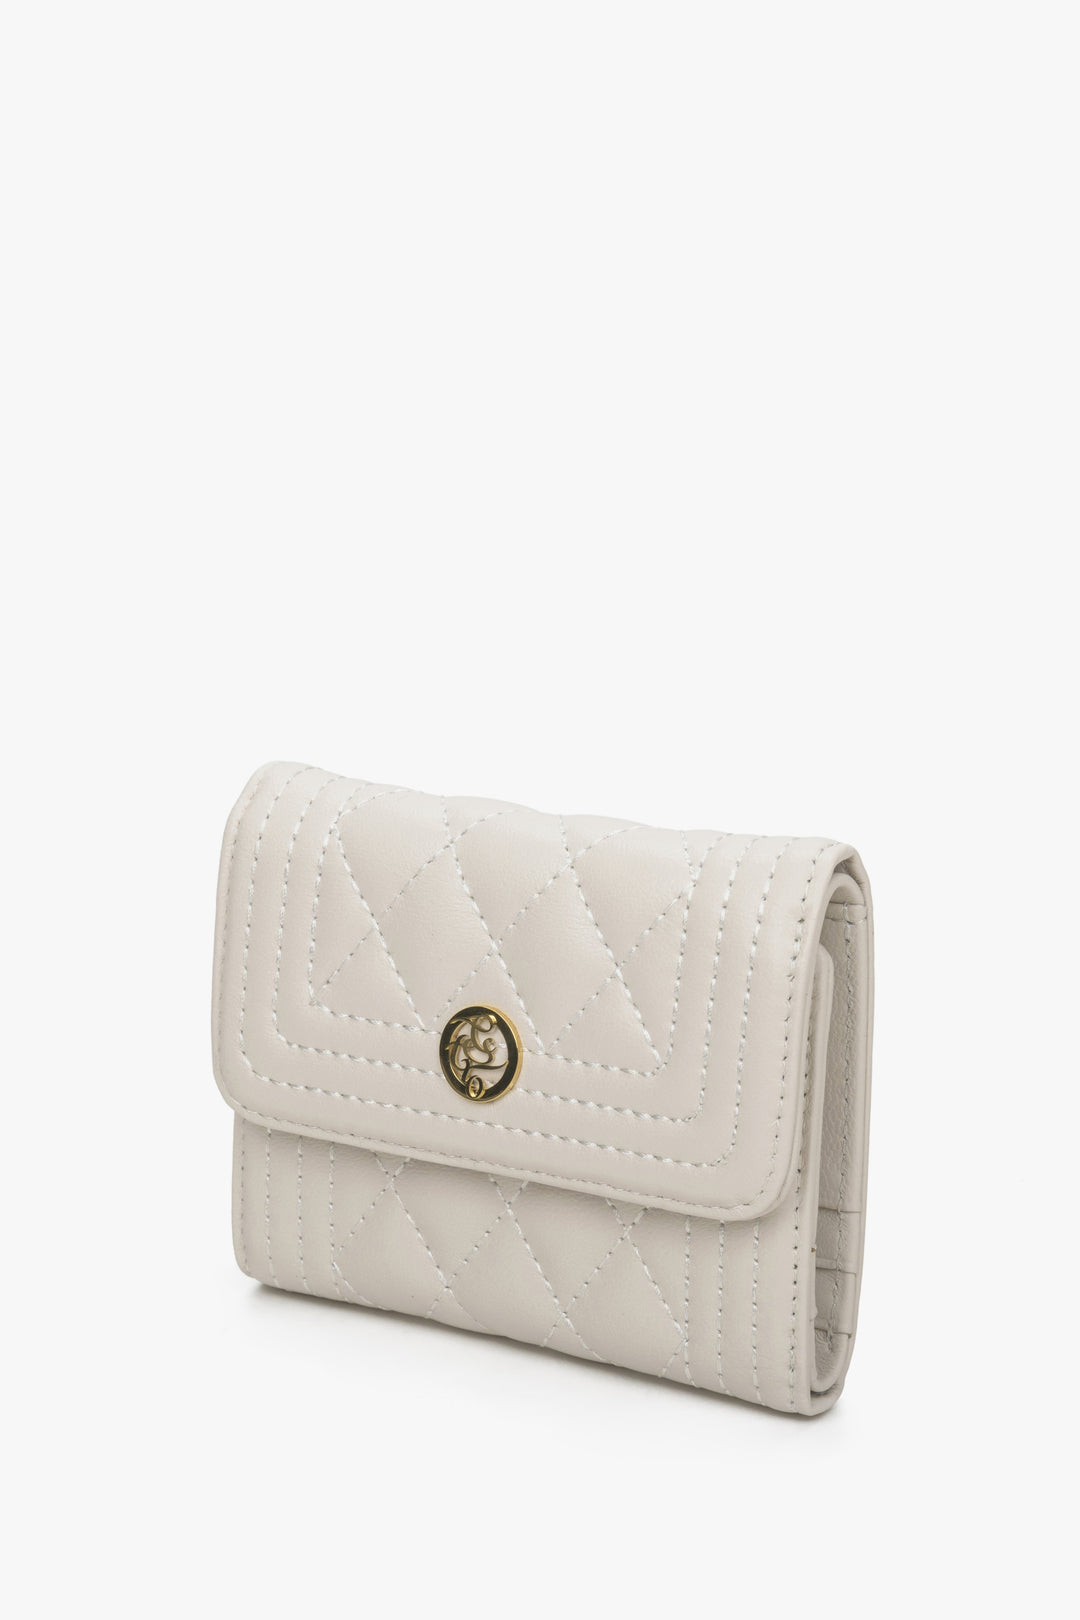 Women's light beige Estro wallet.